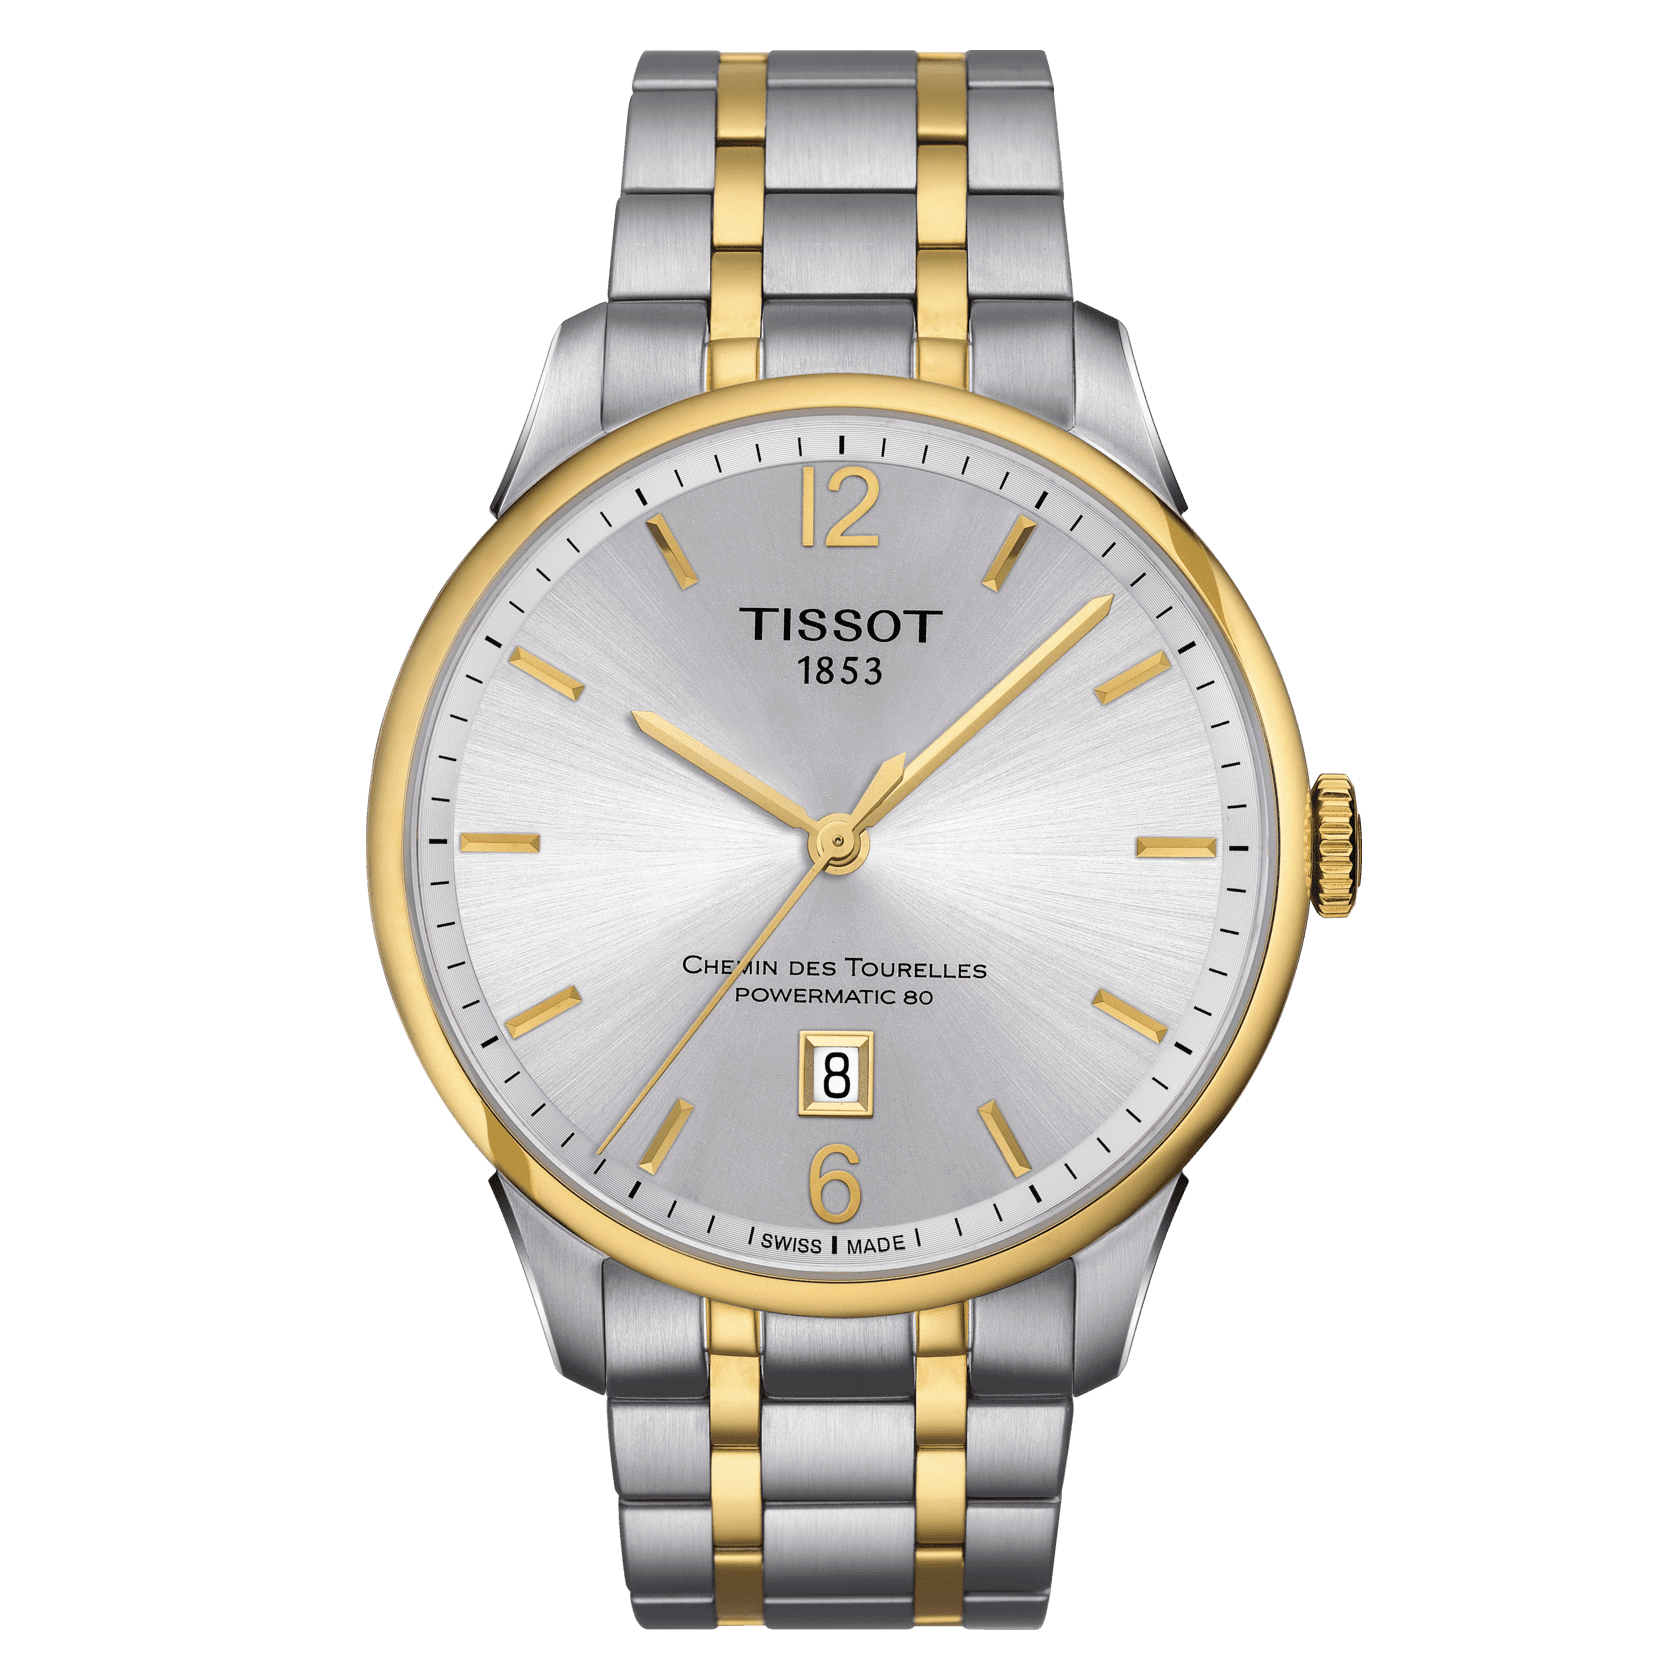 Luxury Replica Watches Rolex